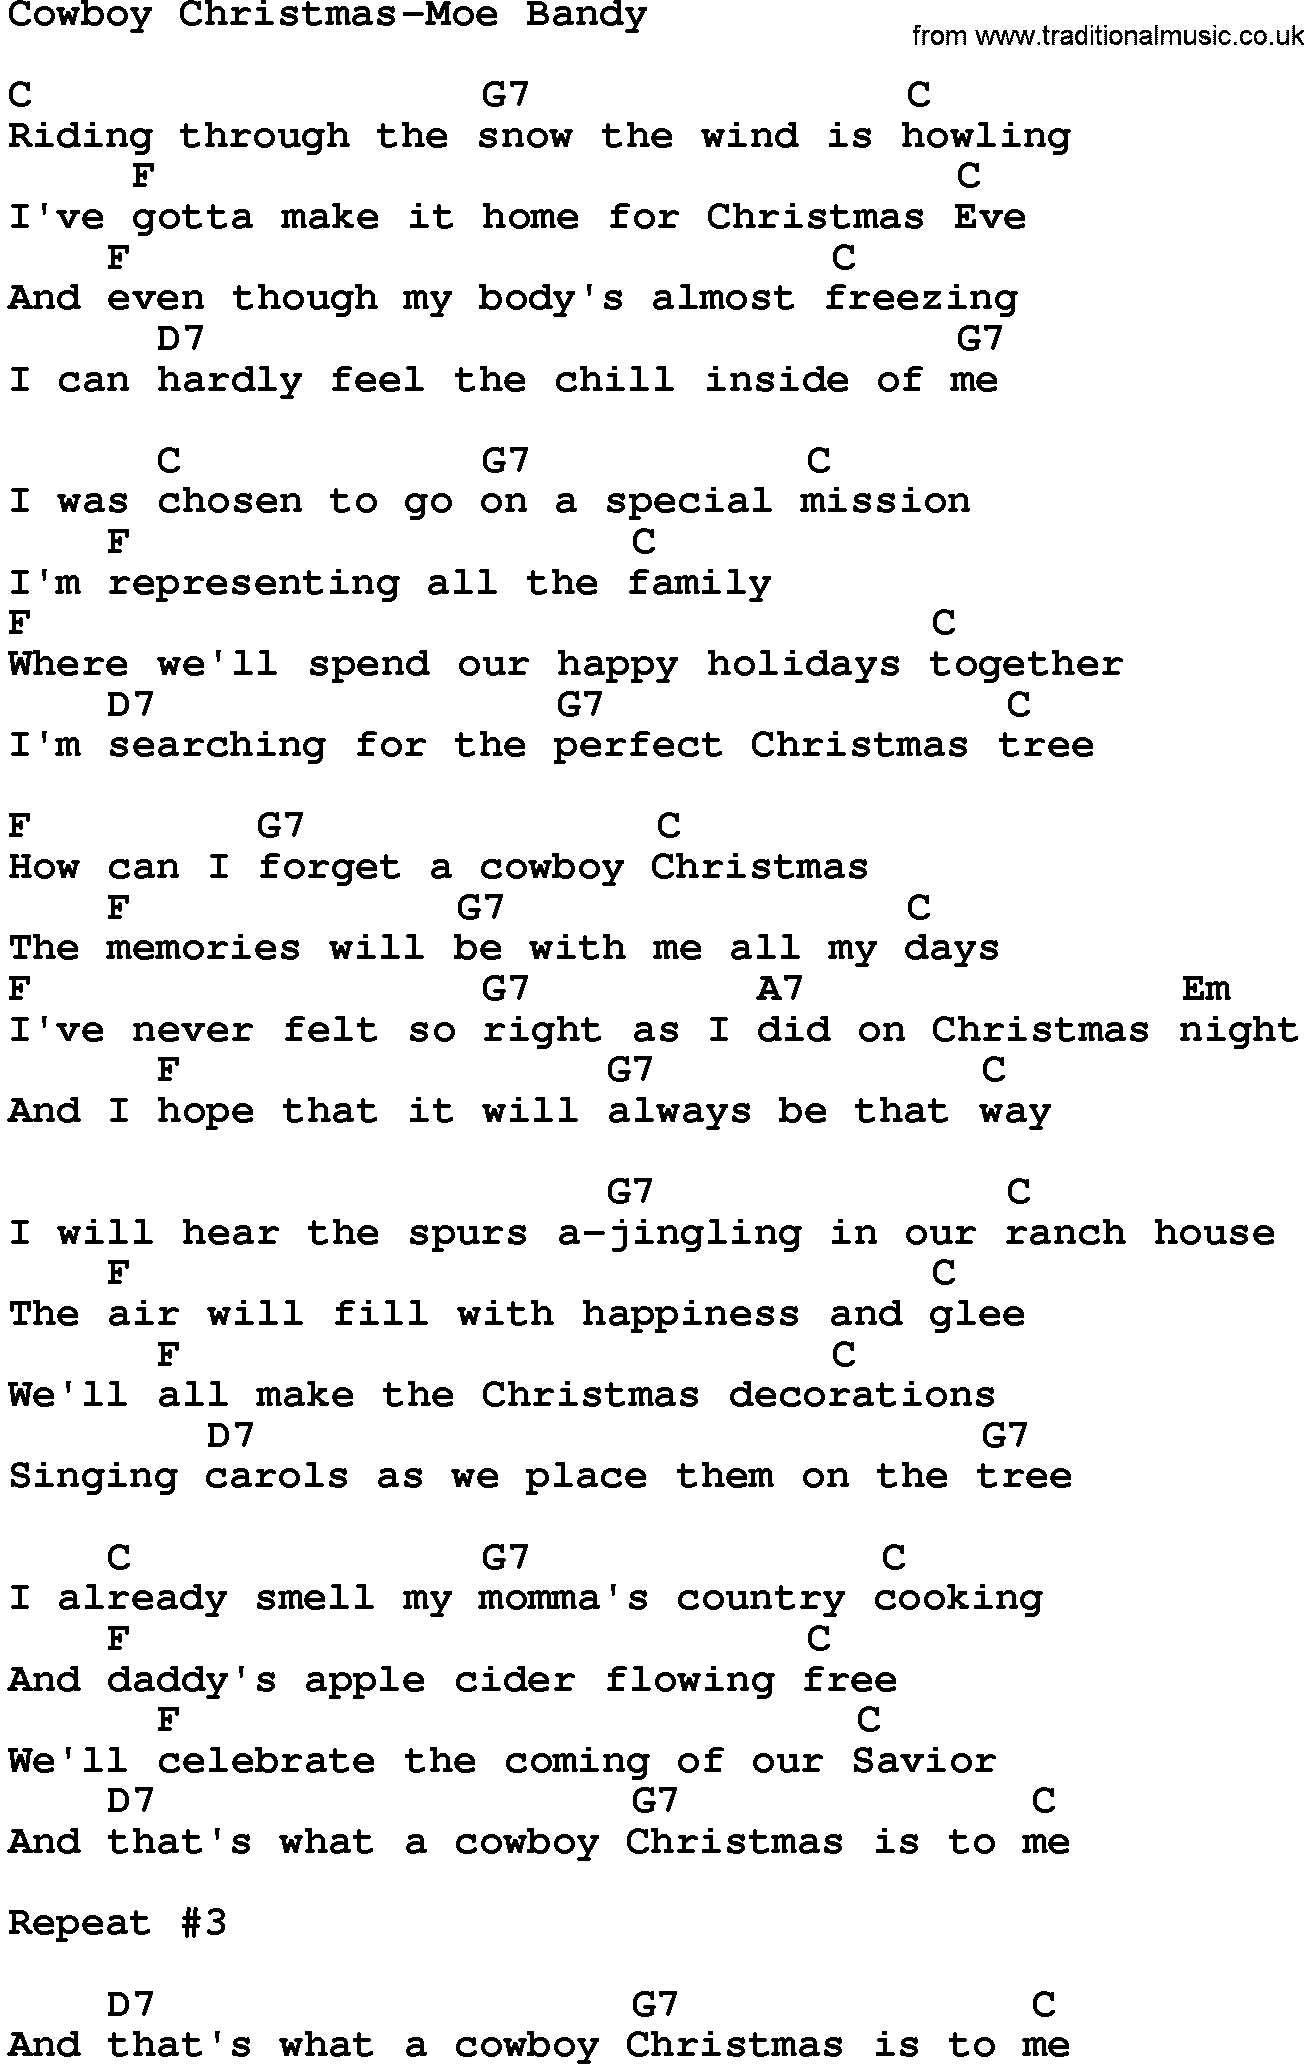 Country music song: Cowboy Christmas-Moe Bandy lyrics and chords